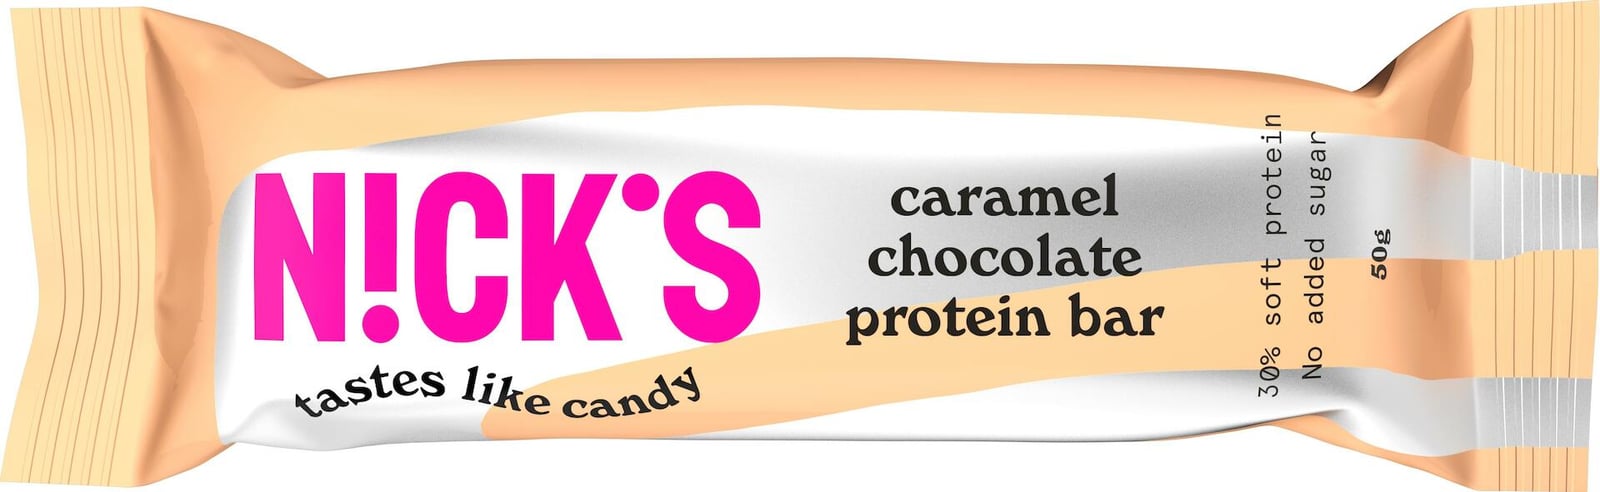 Nick's Caramel Chocolate Protein Bar 50 ml